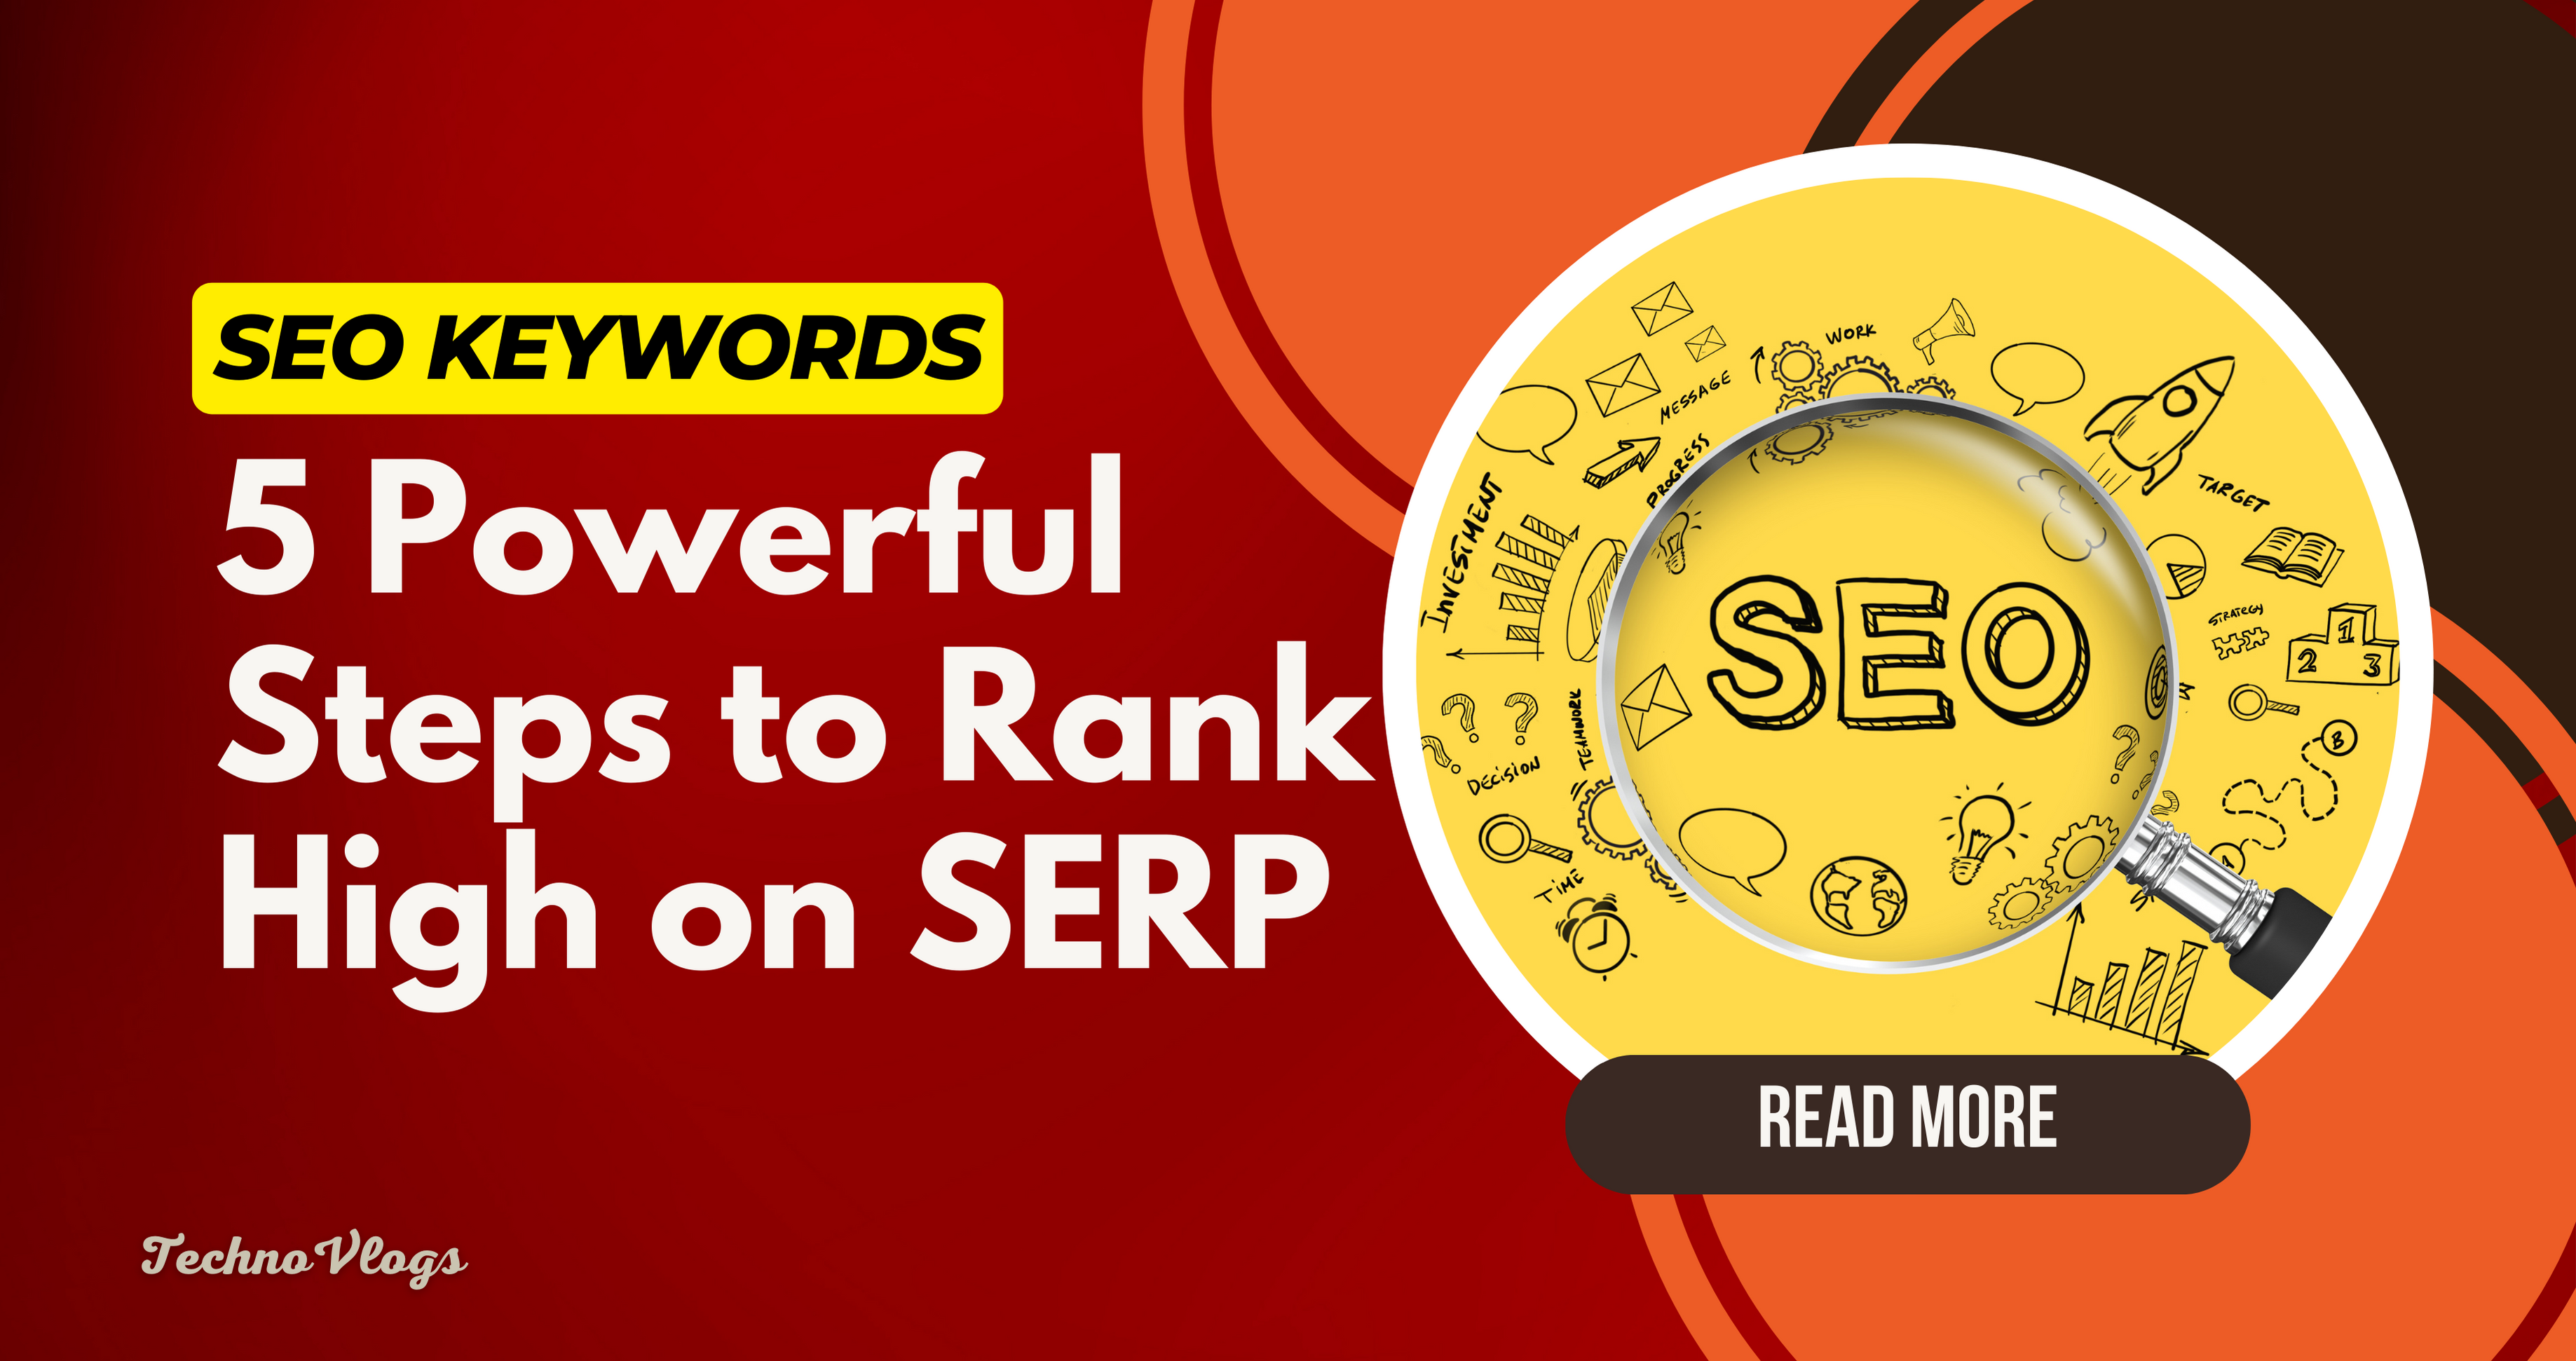 SEO Keywords: 5 Powerful Steps to Rank High in SERP